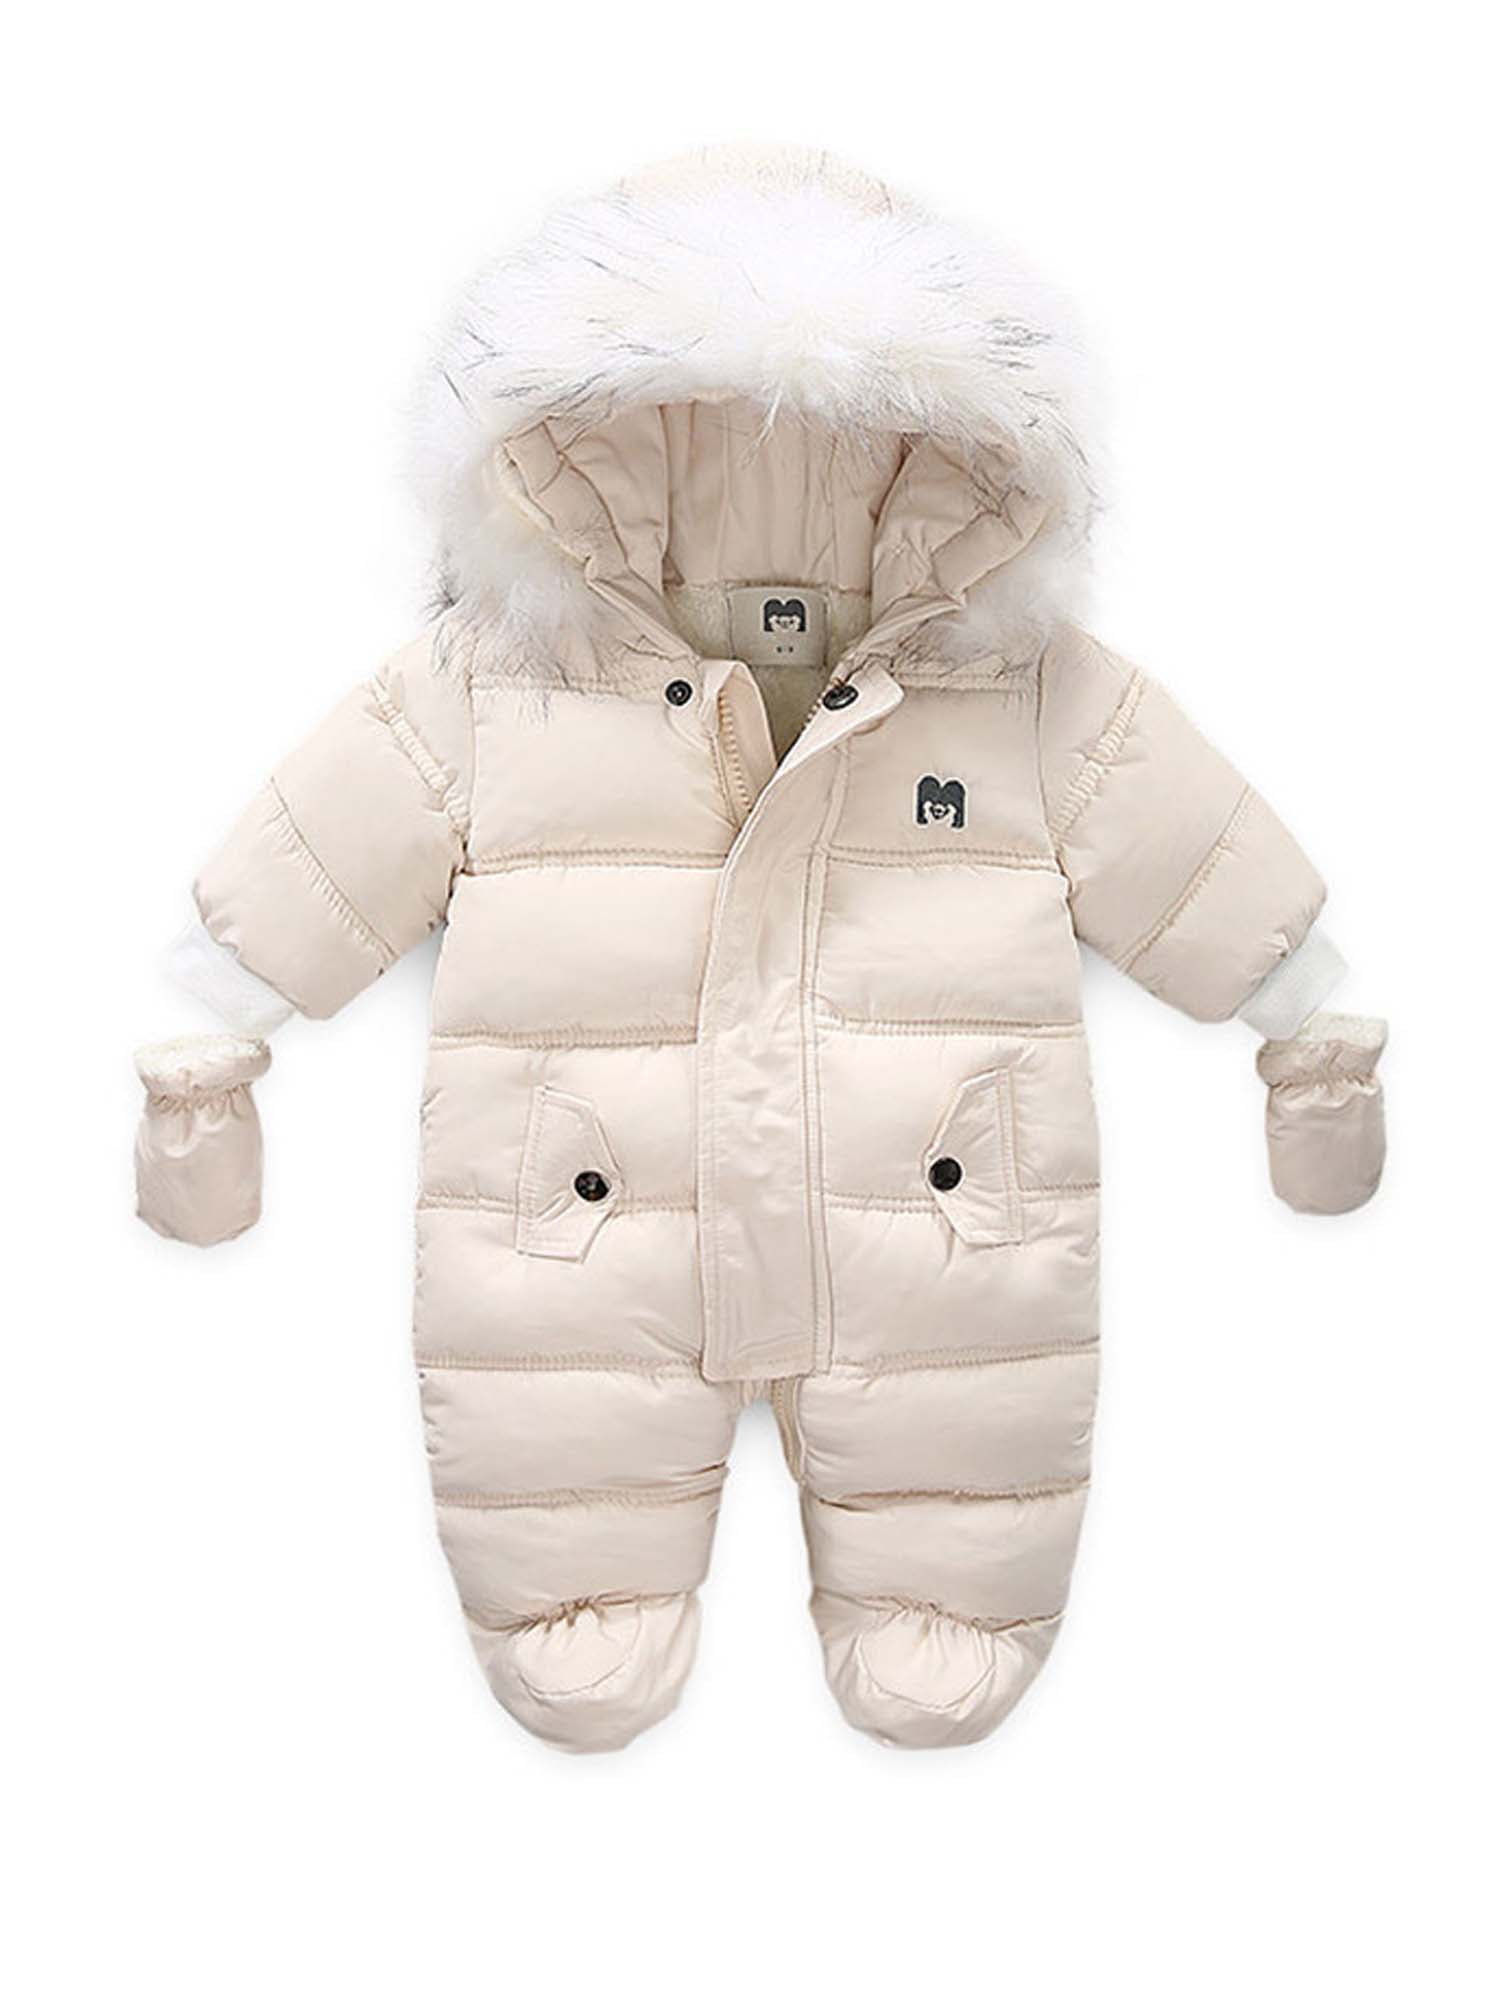 BOZWELL Newborn Baby Cartoon Bear Snowsuit Infant Jumpsuit Footie Romper Winter Coat Romper